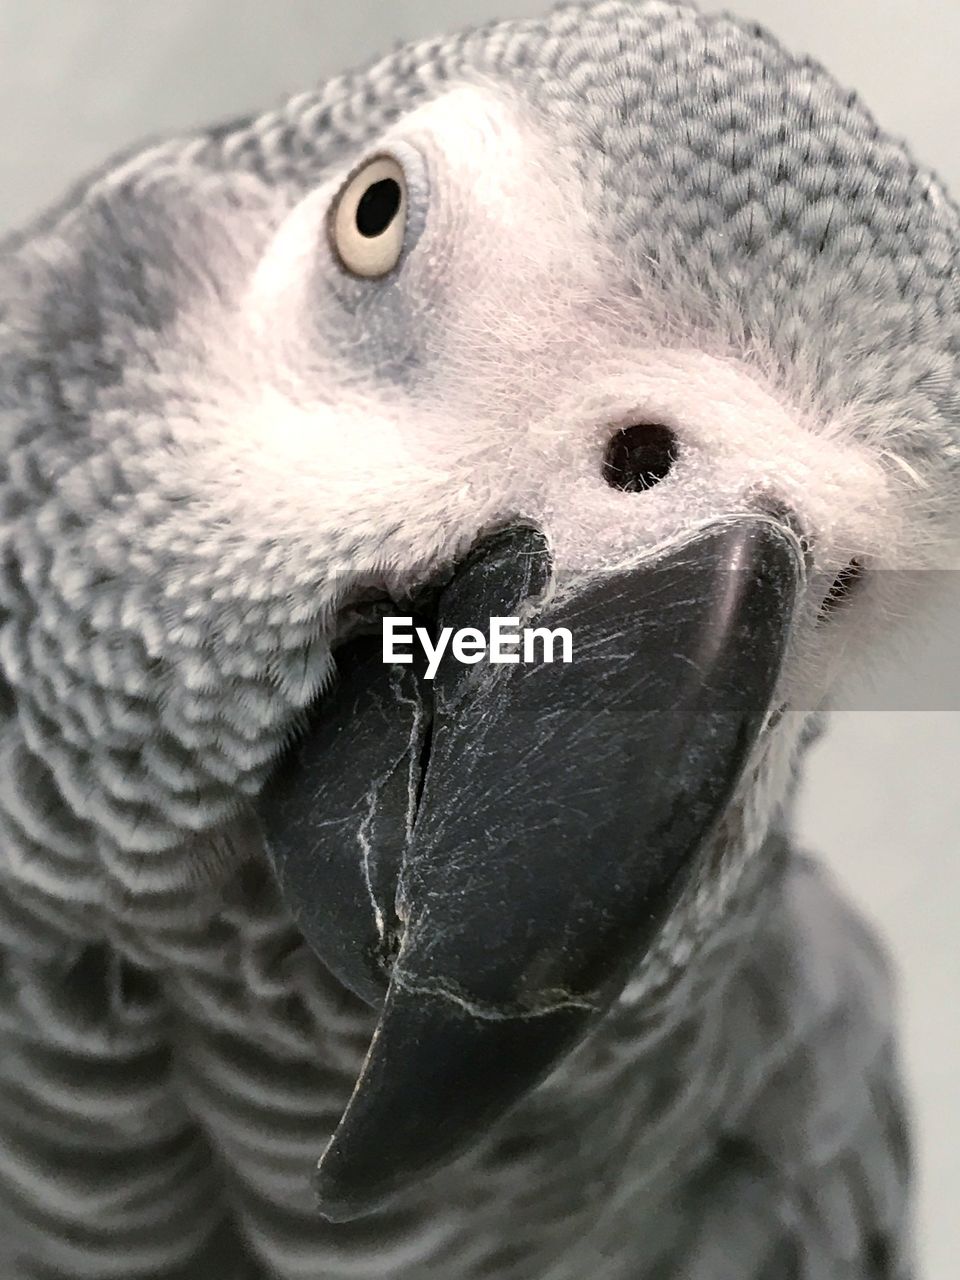 CLOSE-UP PORTRAIT OF A BIRD